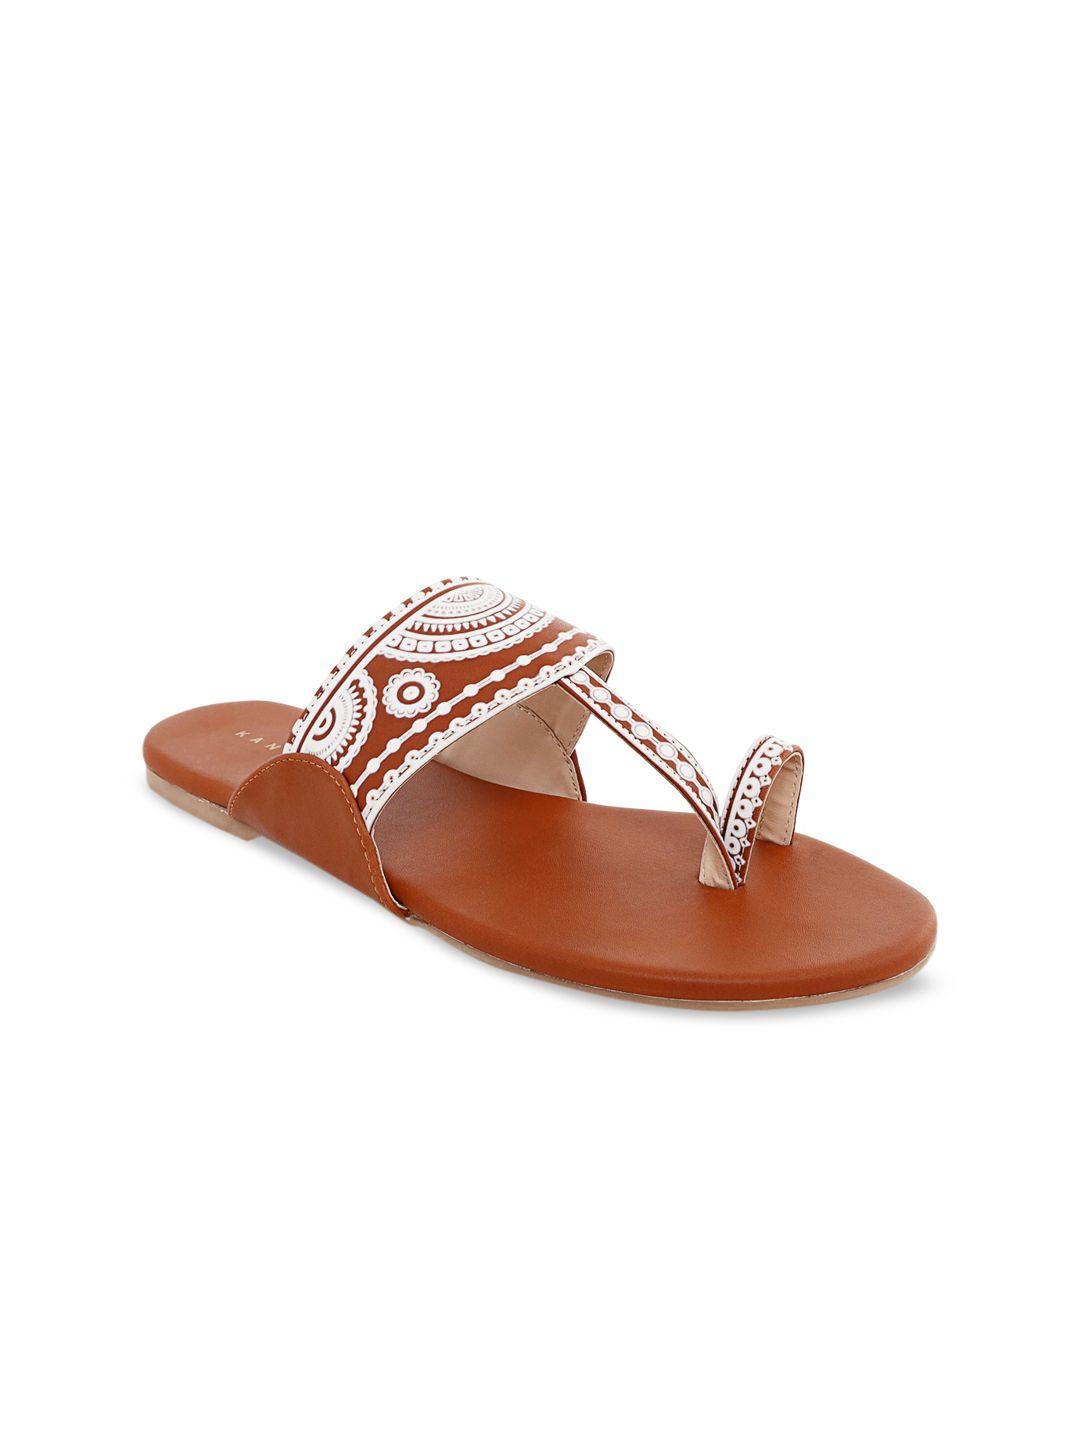 kanvas-women-tan-printed-leather-ethnic-one-toe-flats